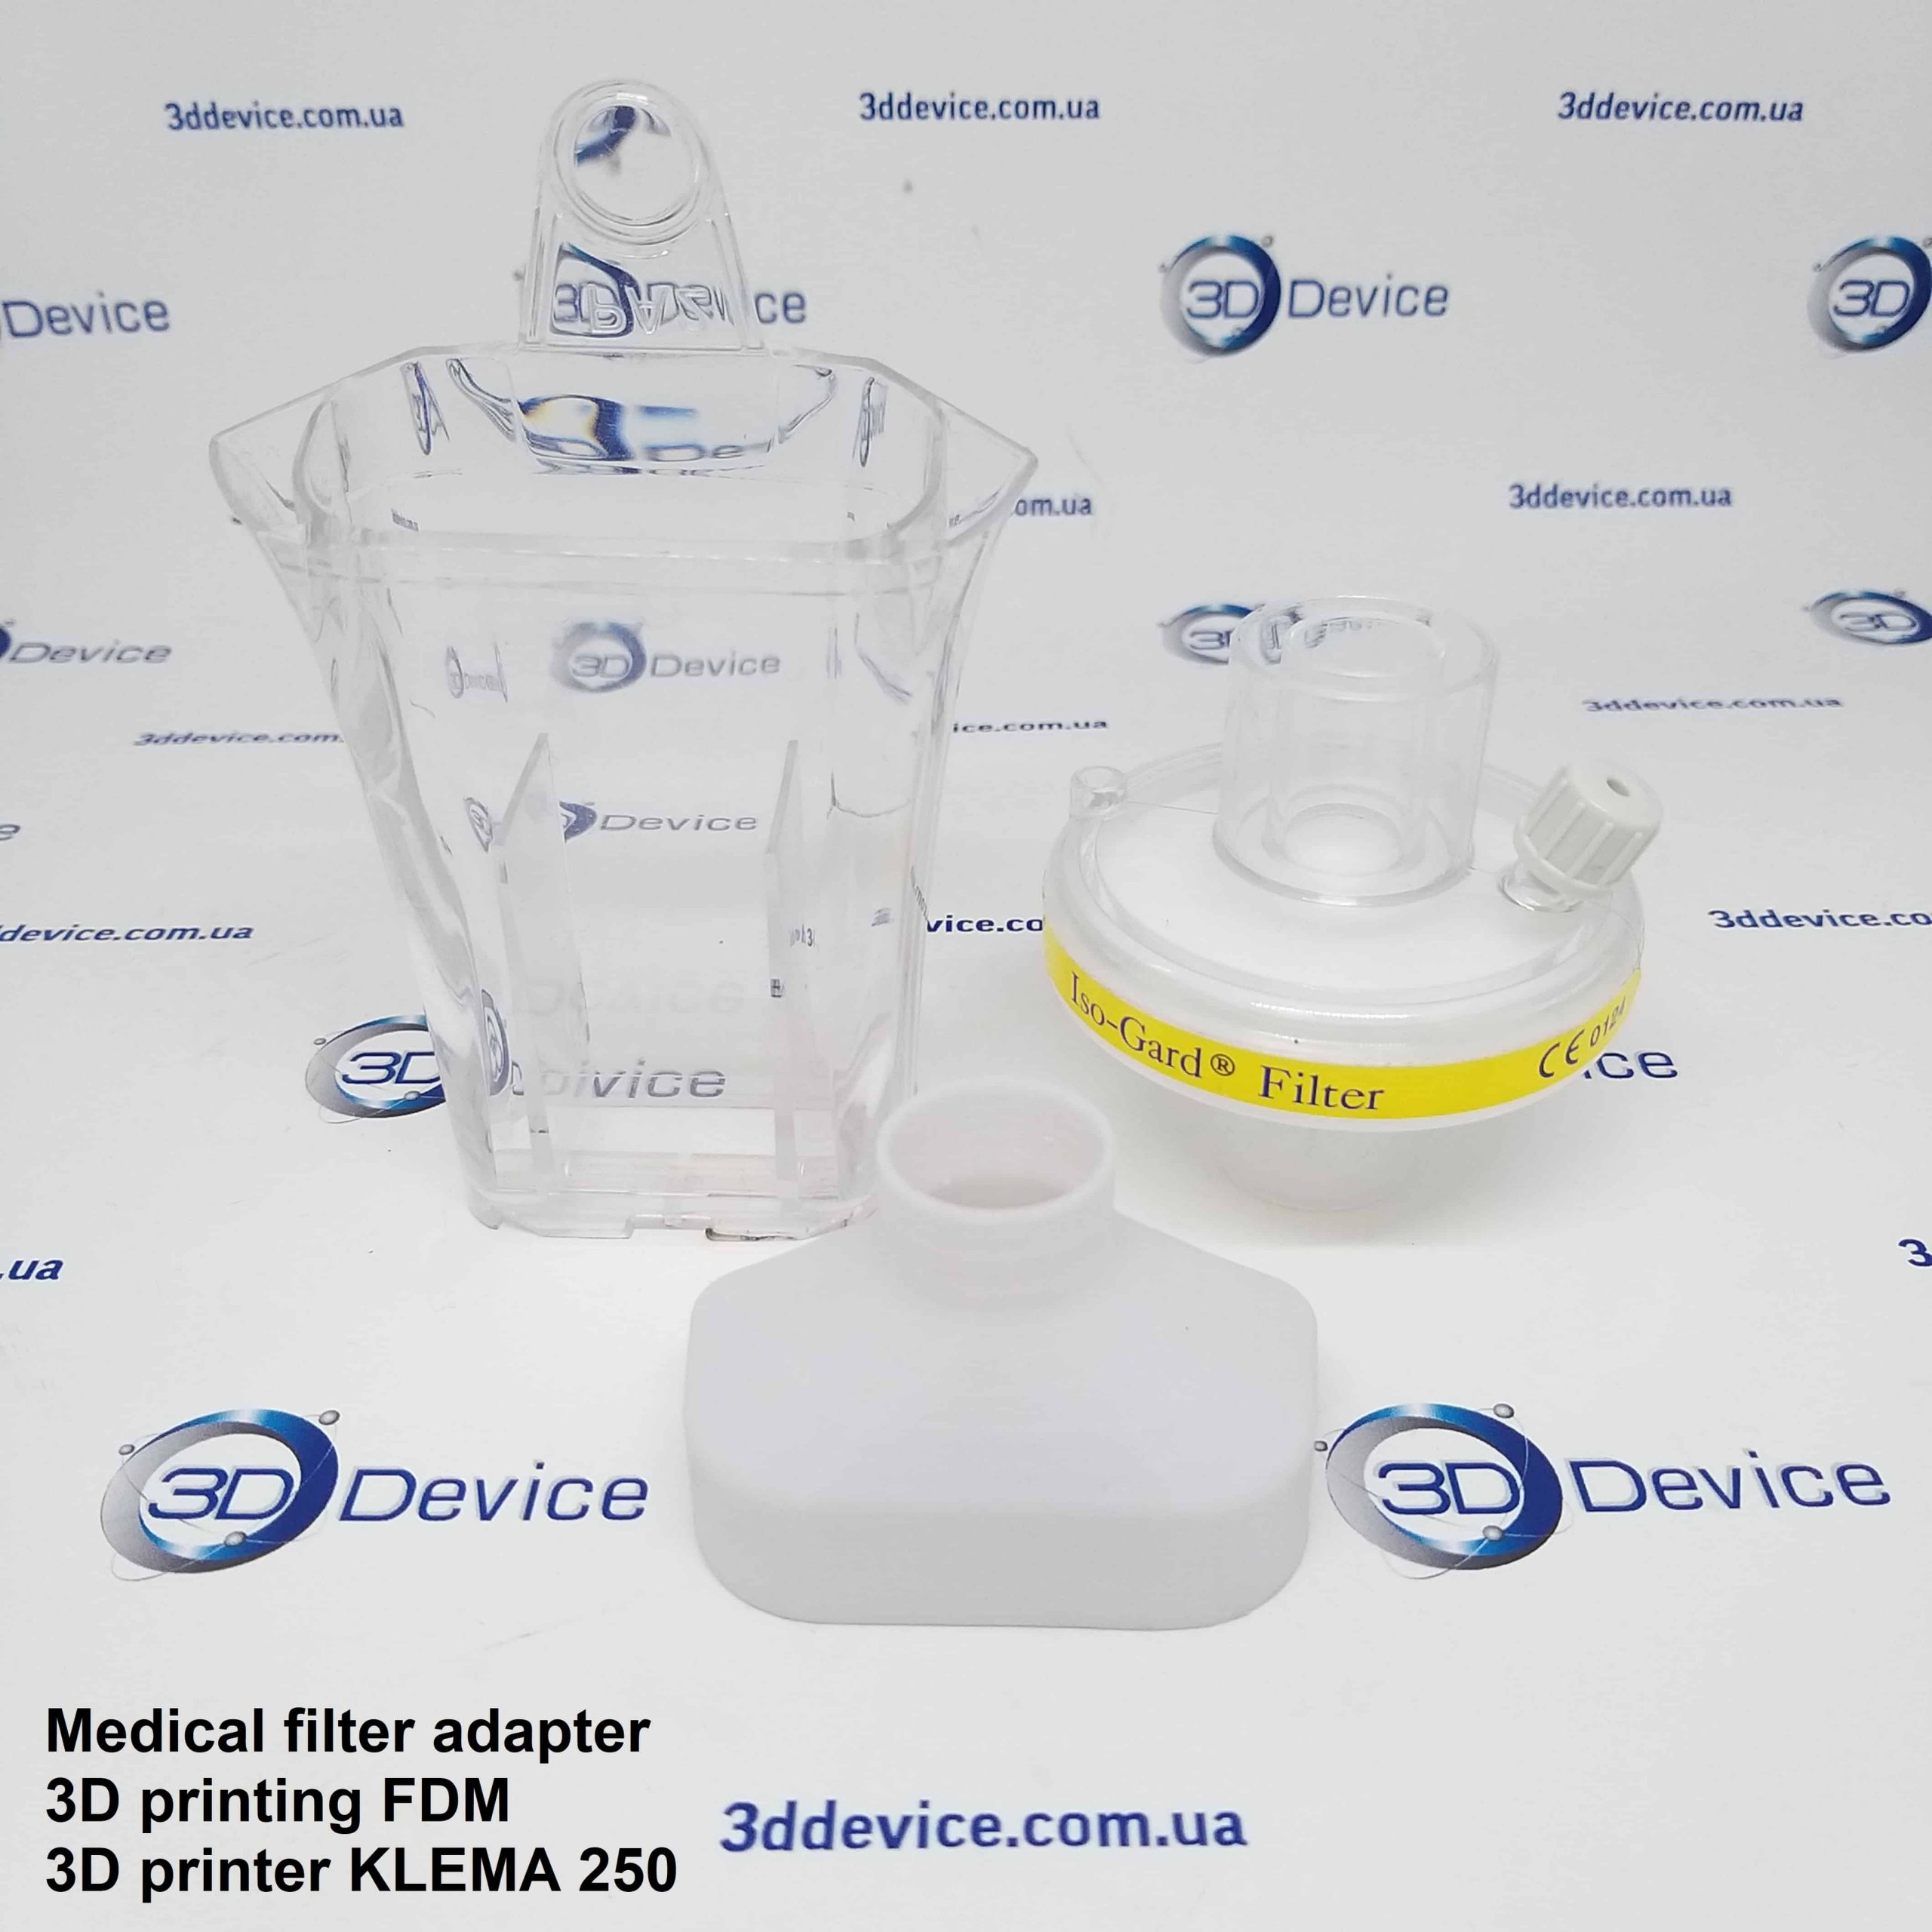 Medical filter adapter 3D printing FDM